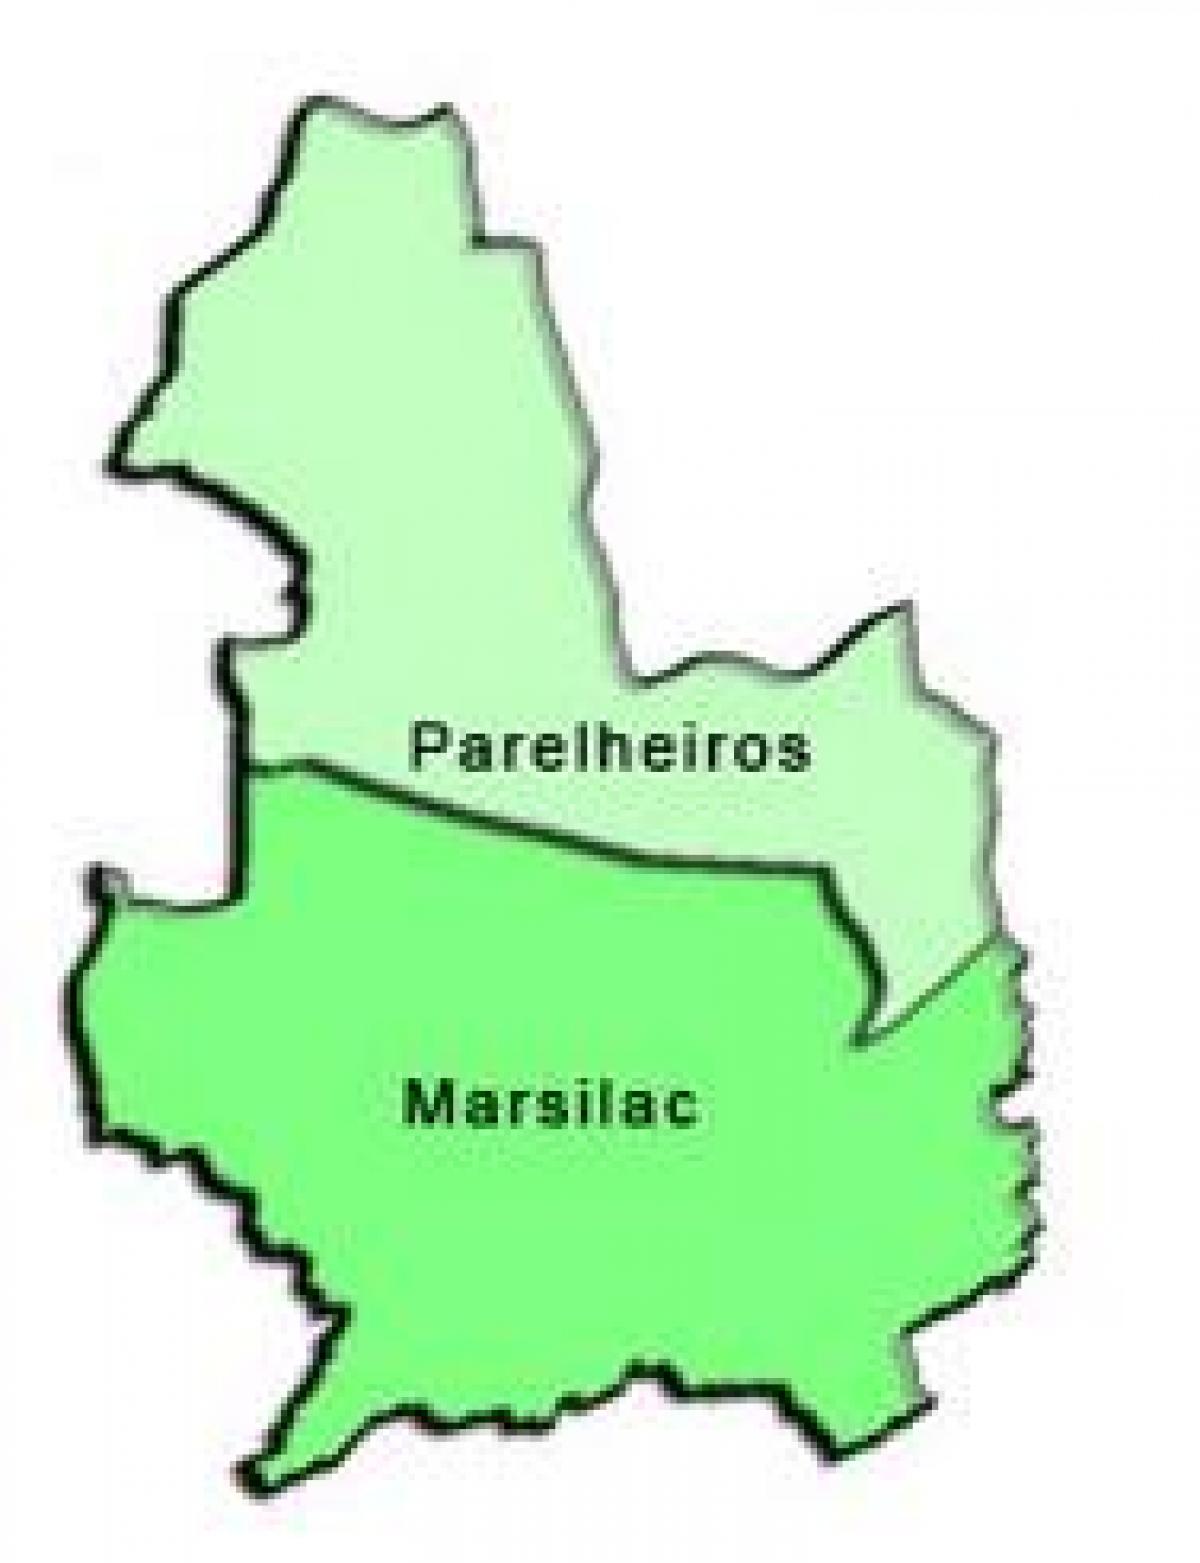 Zemljevid Parelheiros sub-prefekturi